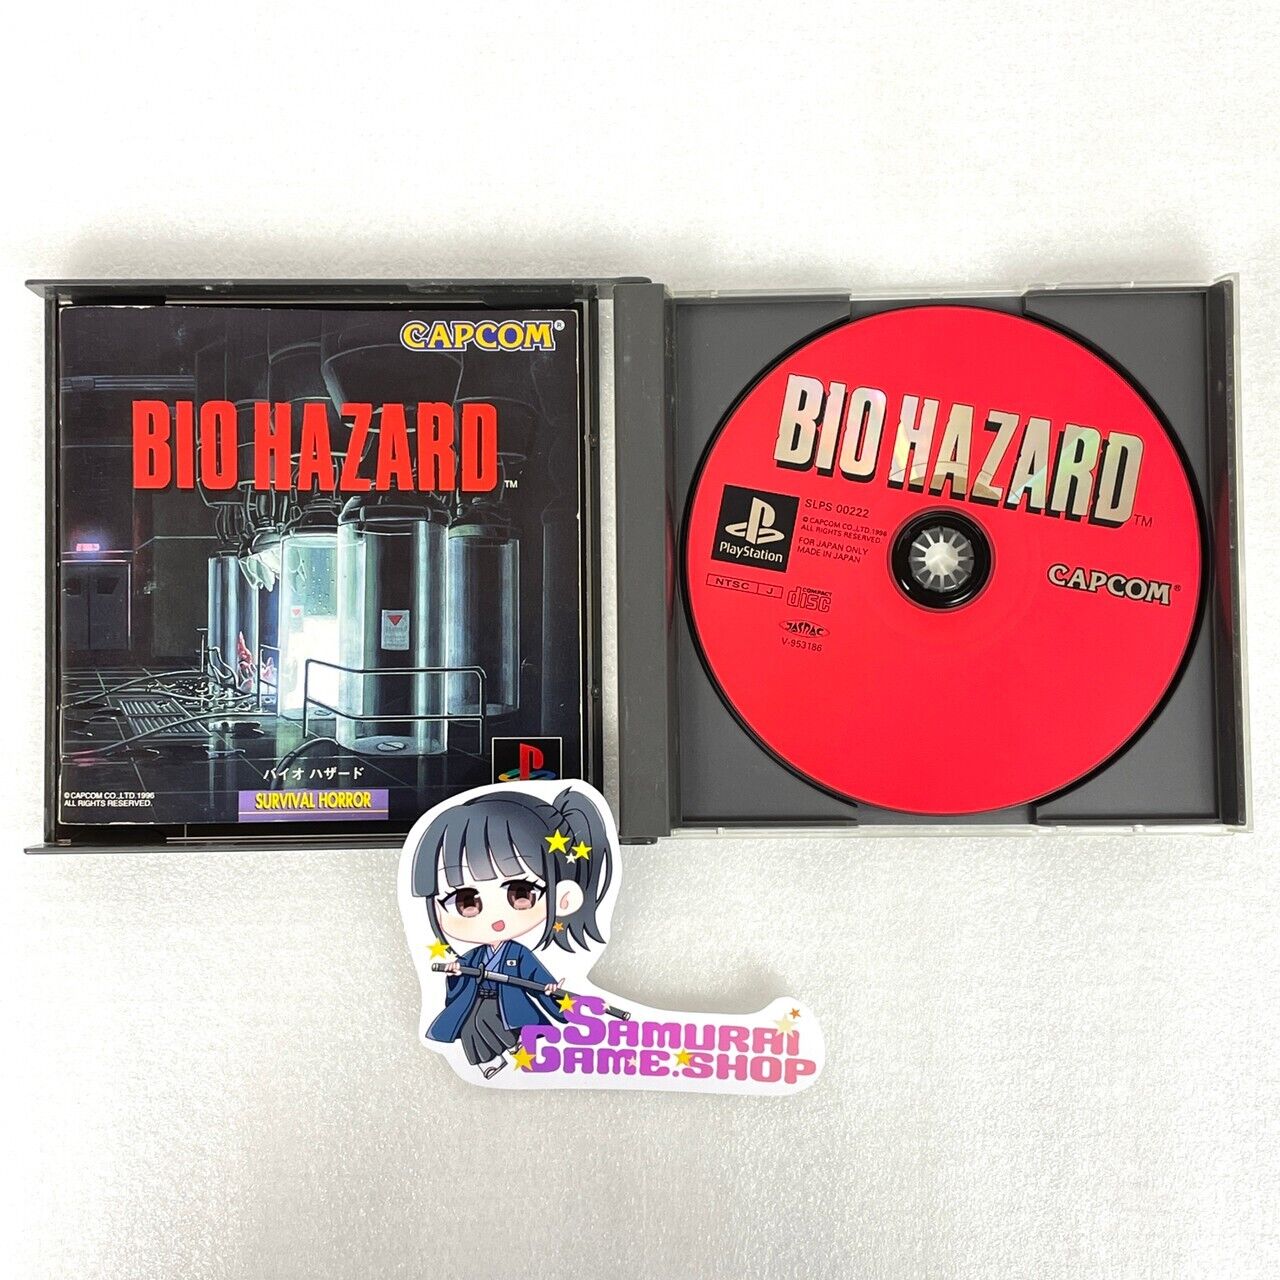 Biohazard 1 Resident Evil PS1 Playstation Capcom Japanese Language Edition Retro